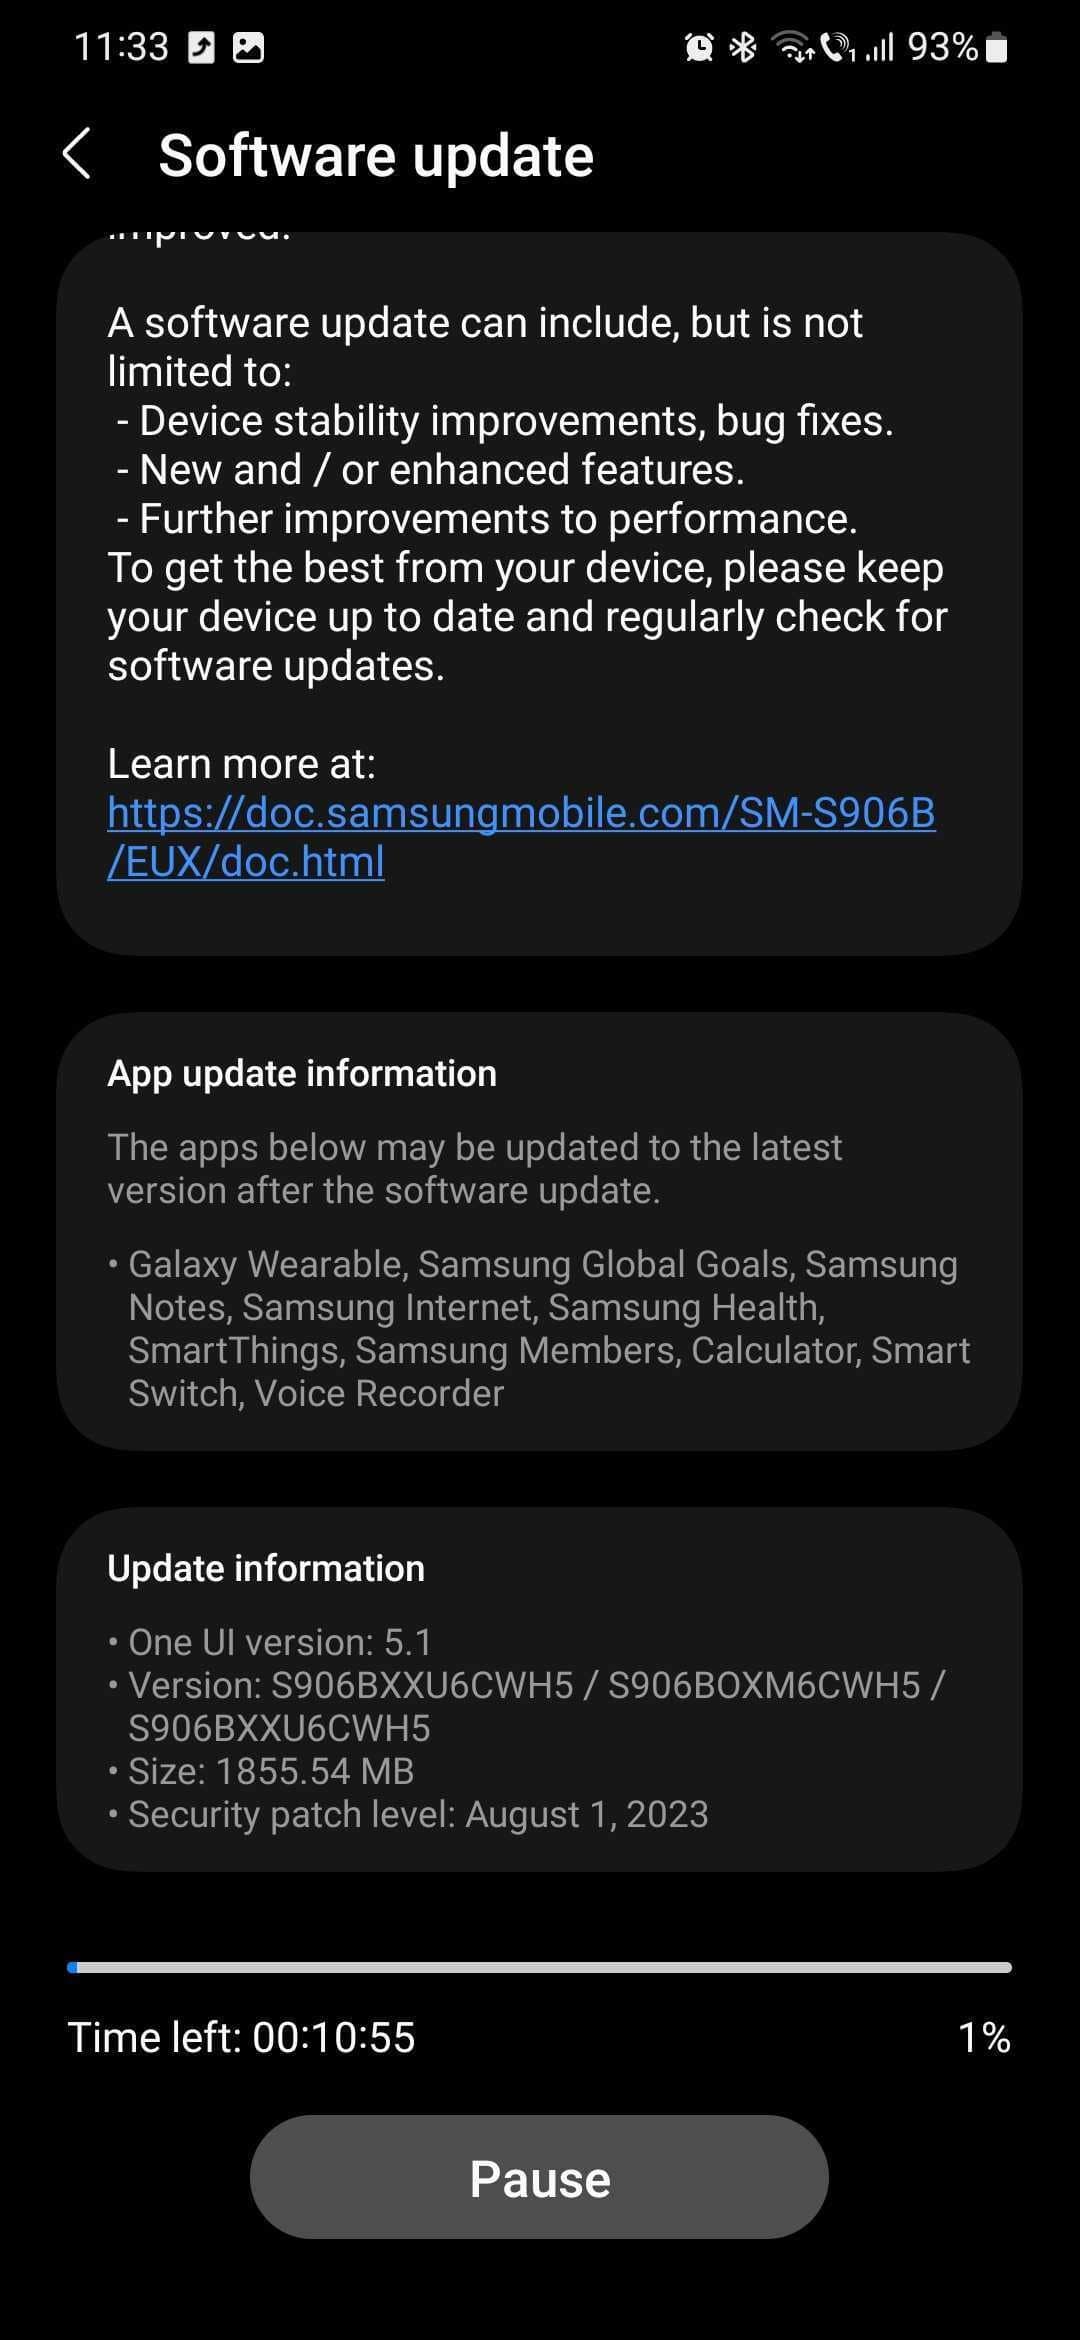 Samsung Galaxy S22 big August update camera improvements